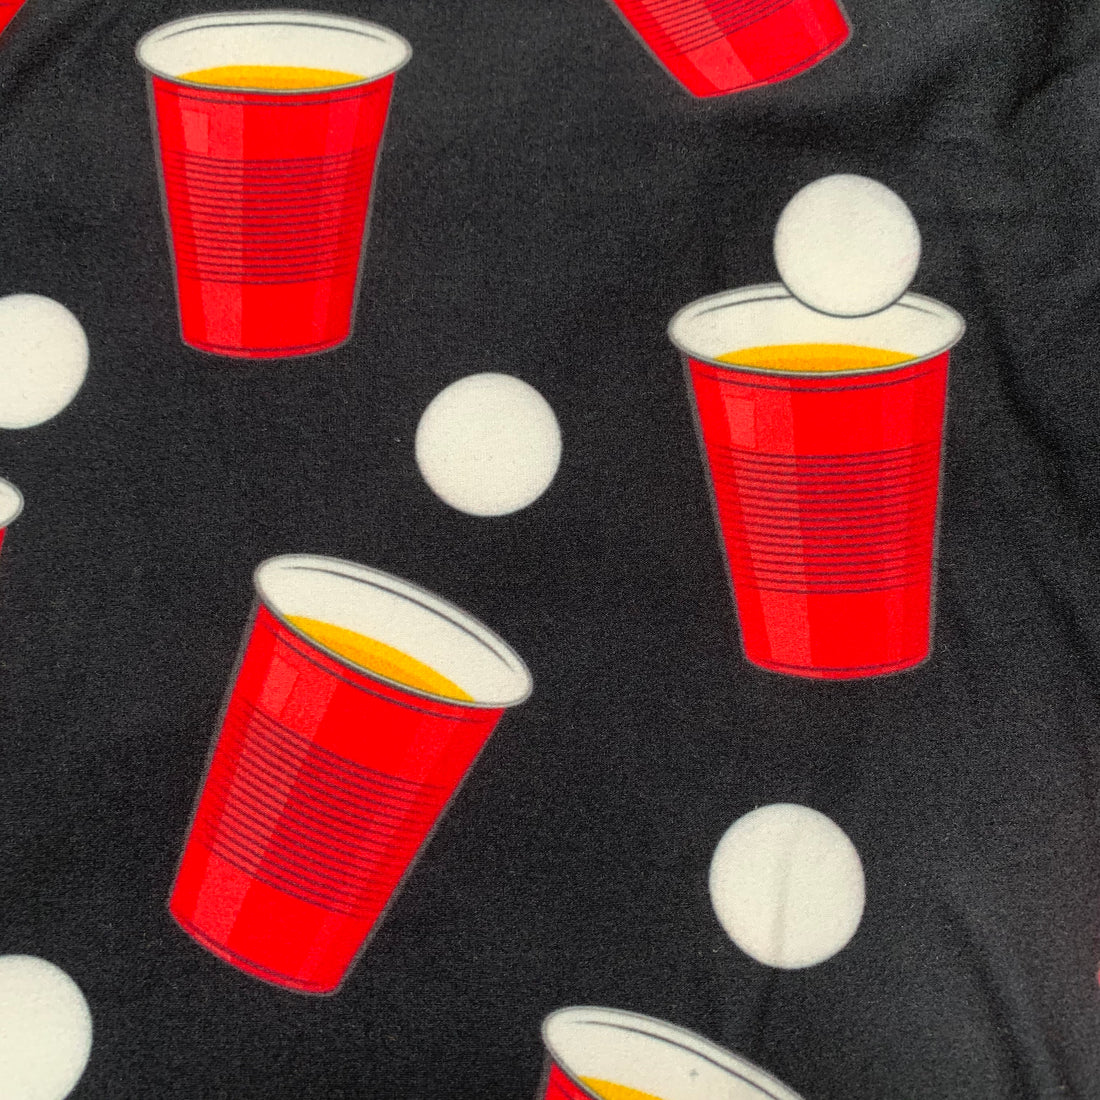 Beer Pong Red Cup Capri Leggings - Fun Party Game Inspired Legwear